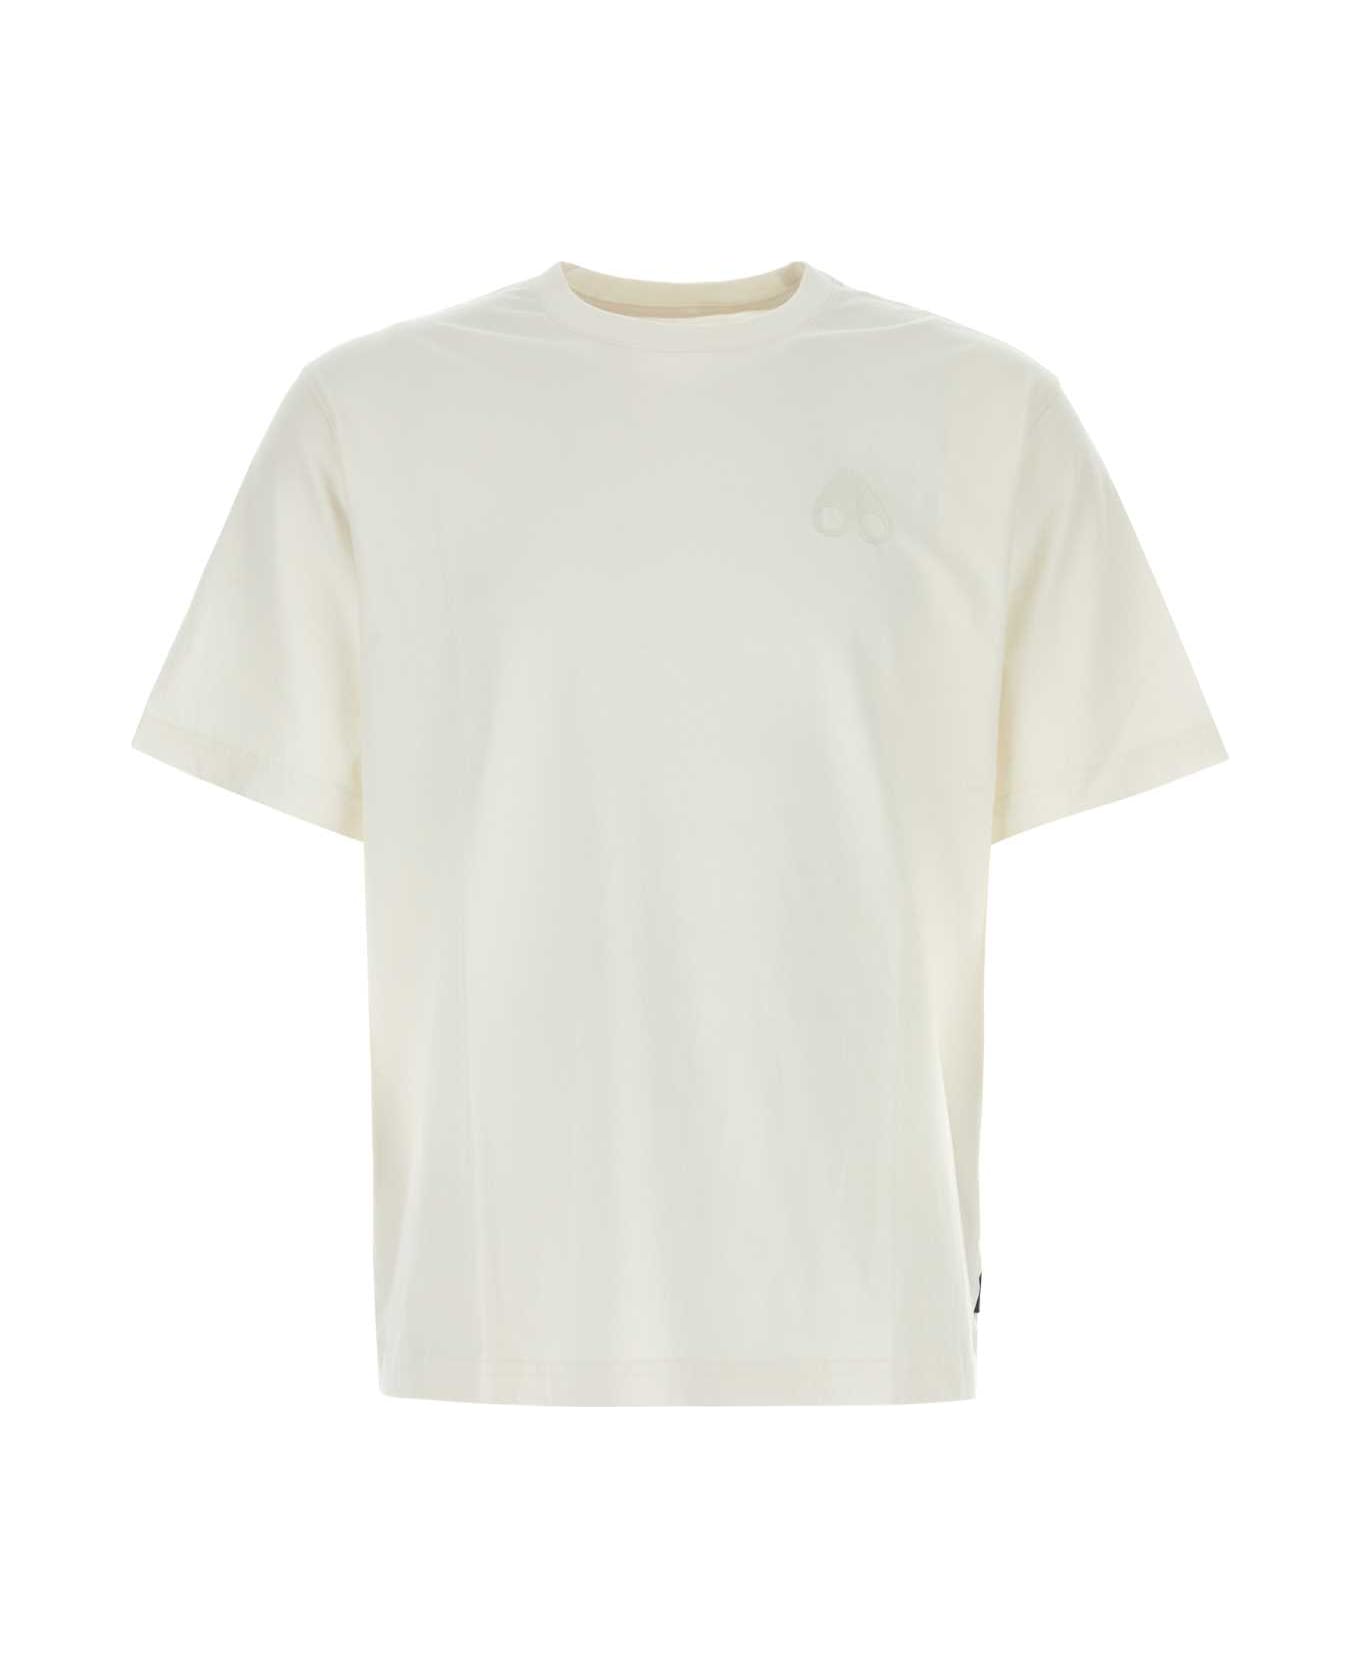 Moose Knuckles White Cotton T-shirt - PLASTER シャツ